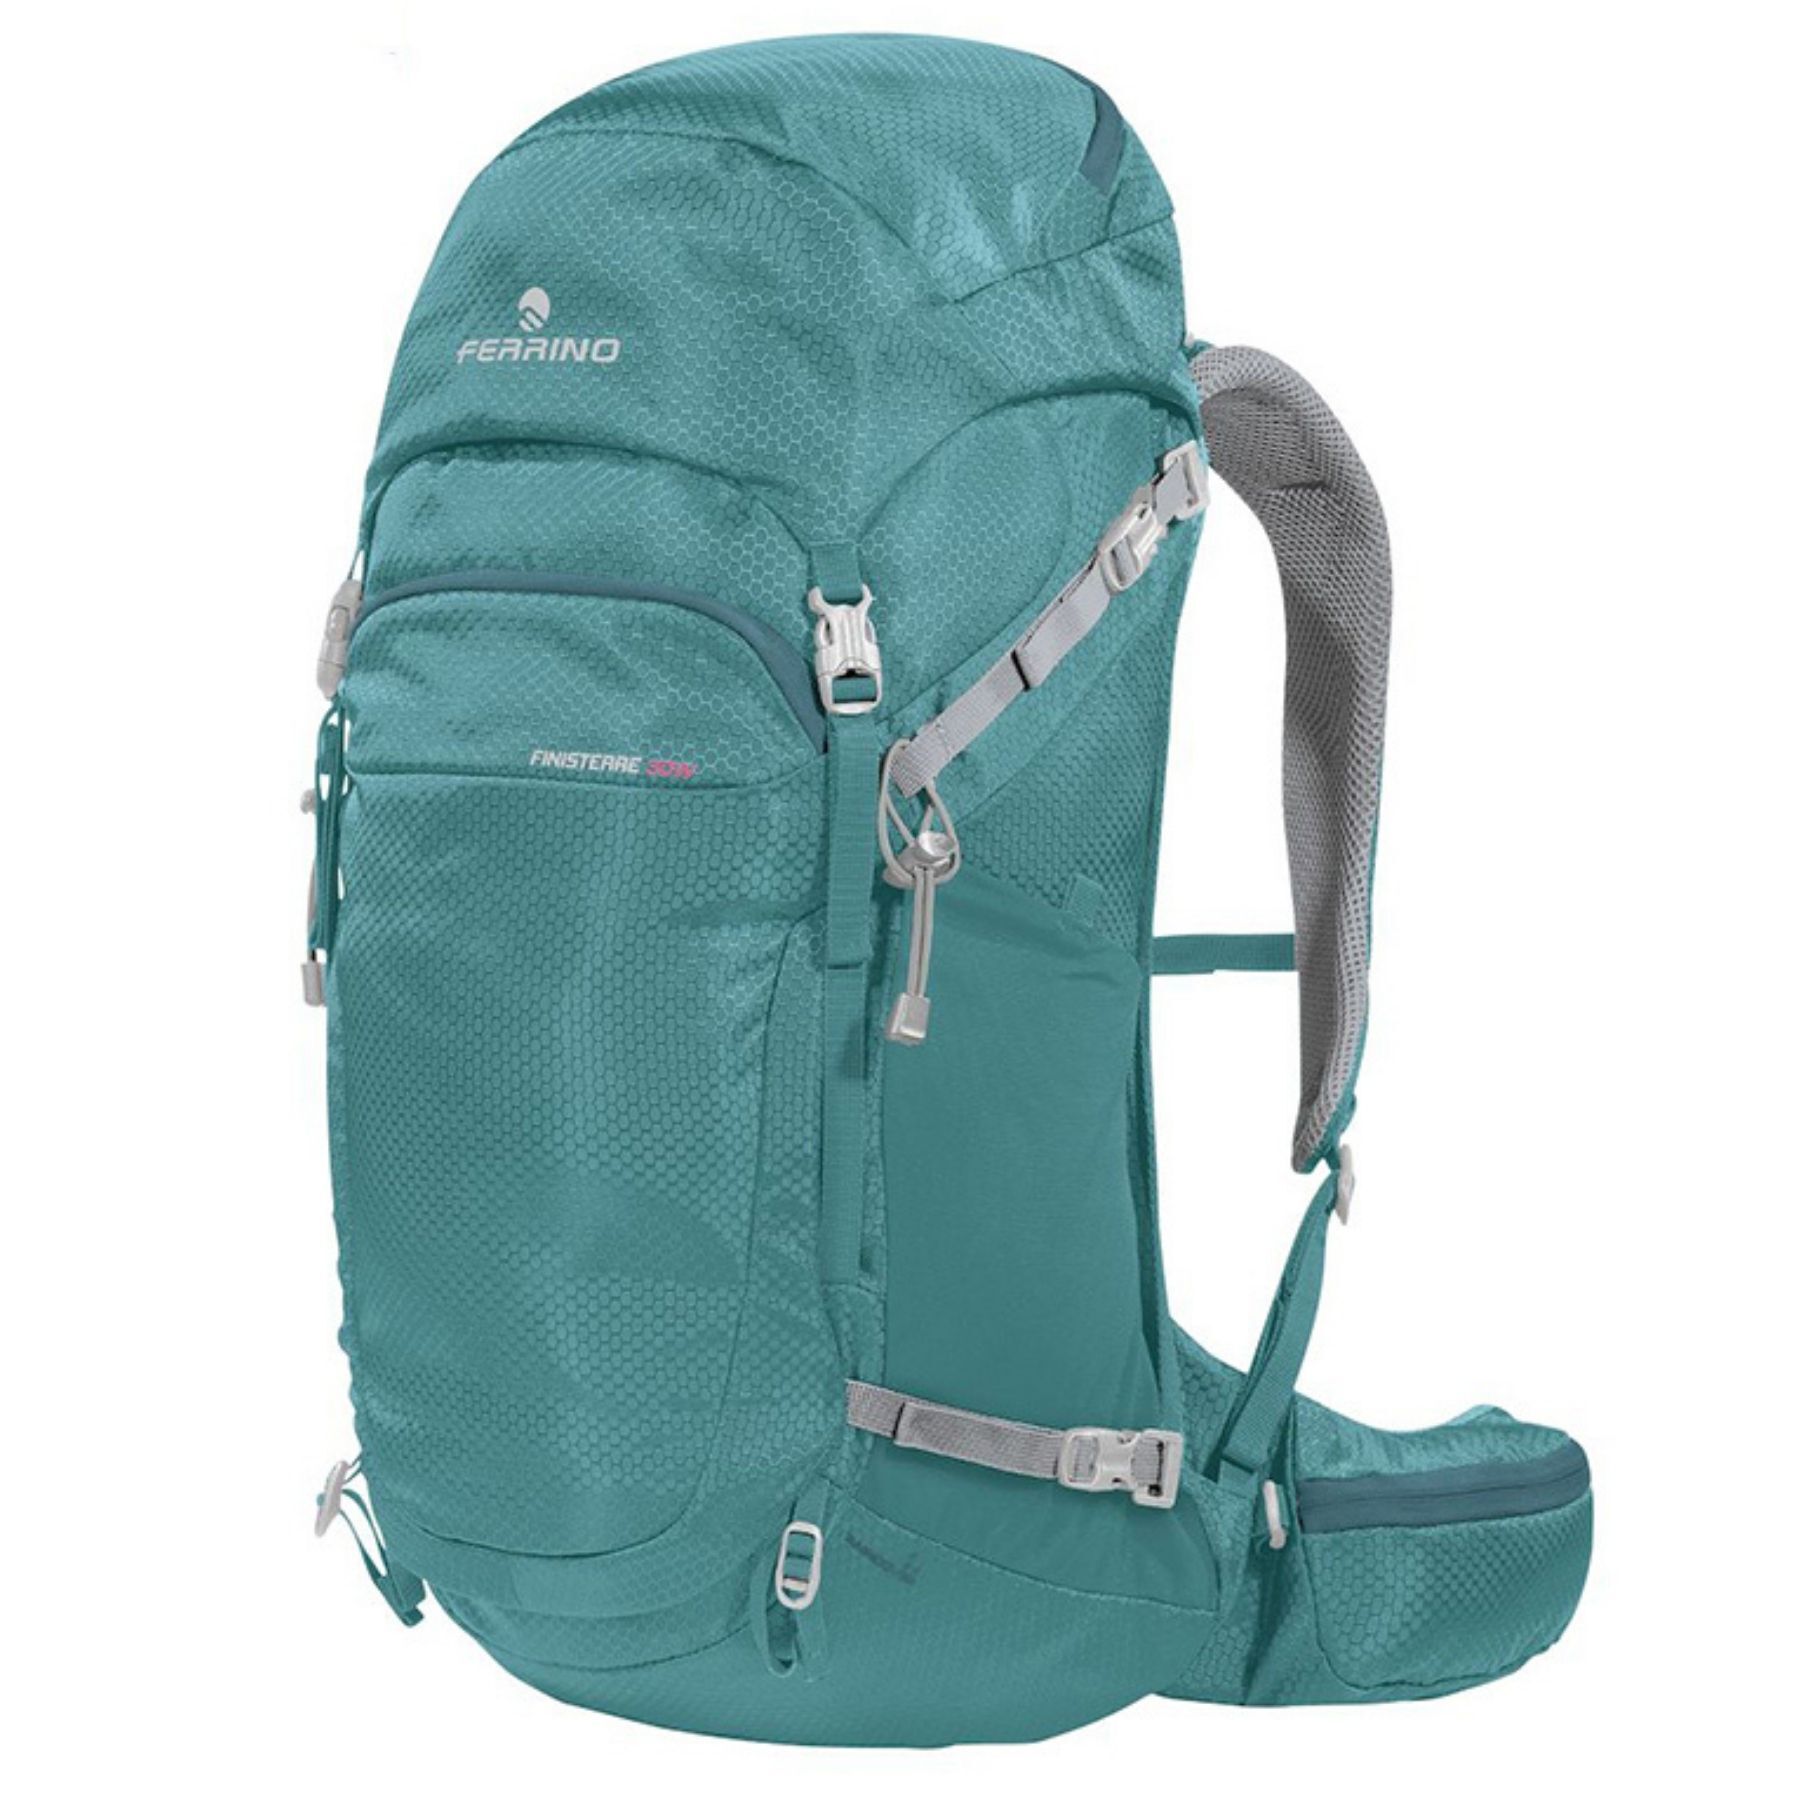 Ferrino Finisterre 30 Lady - Walking backpack